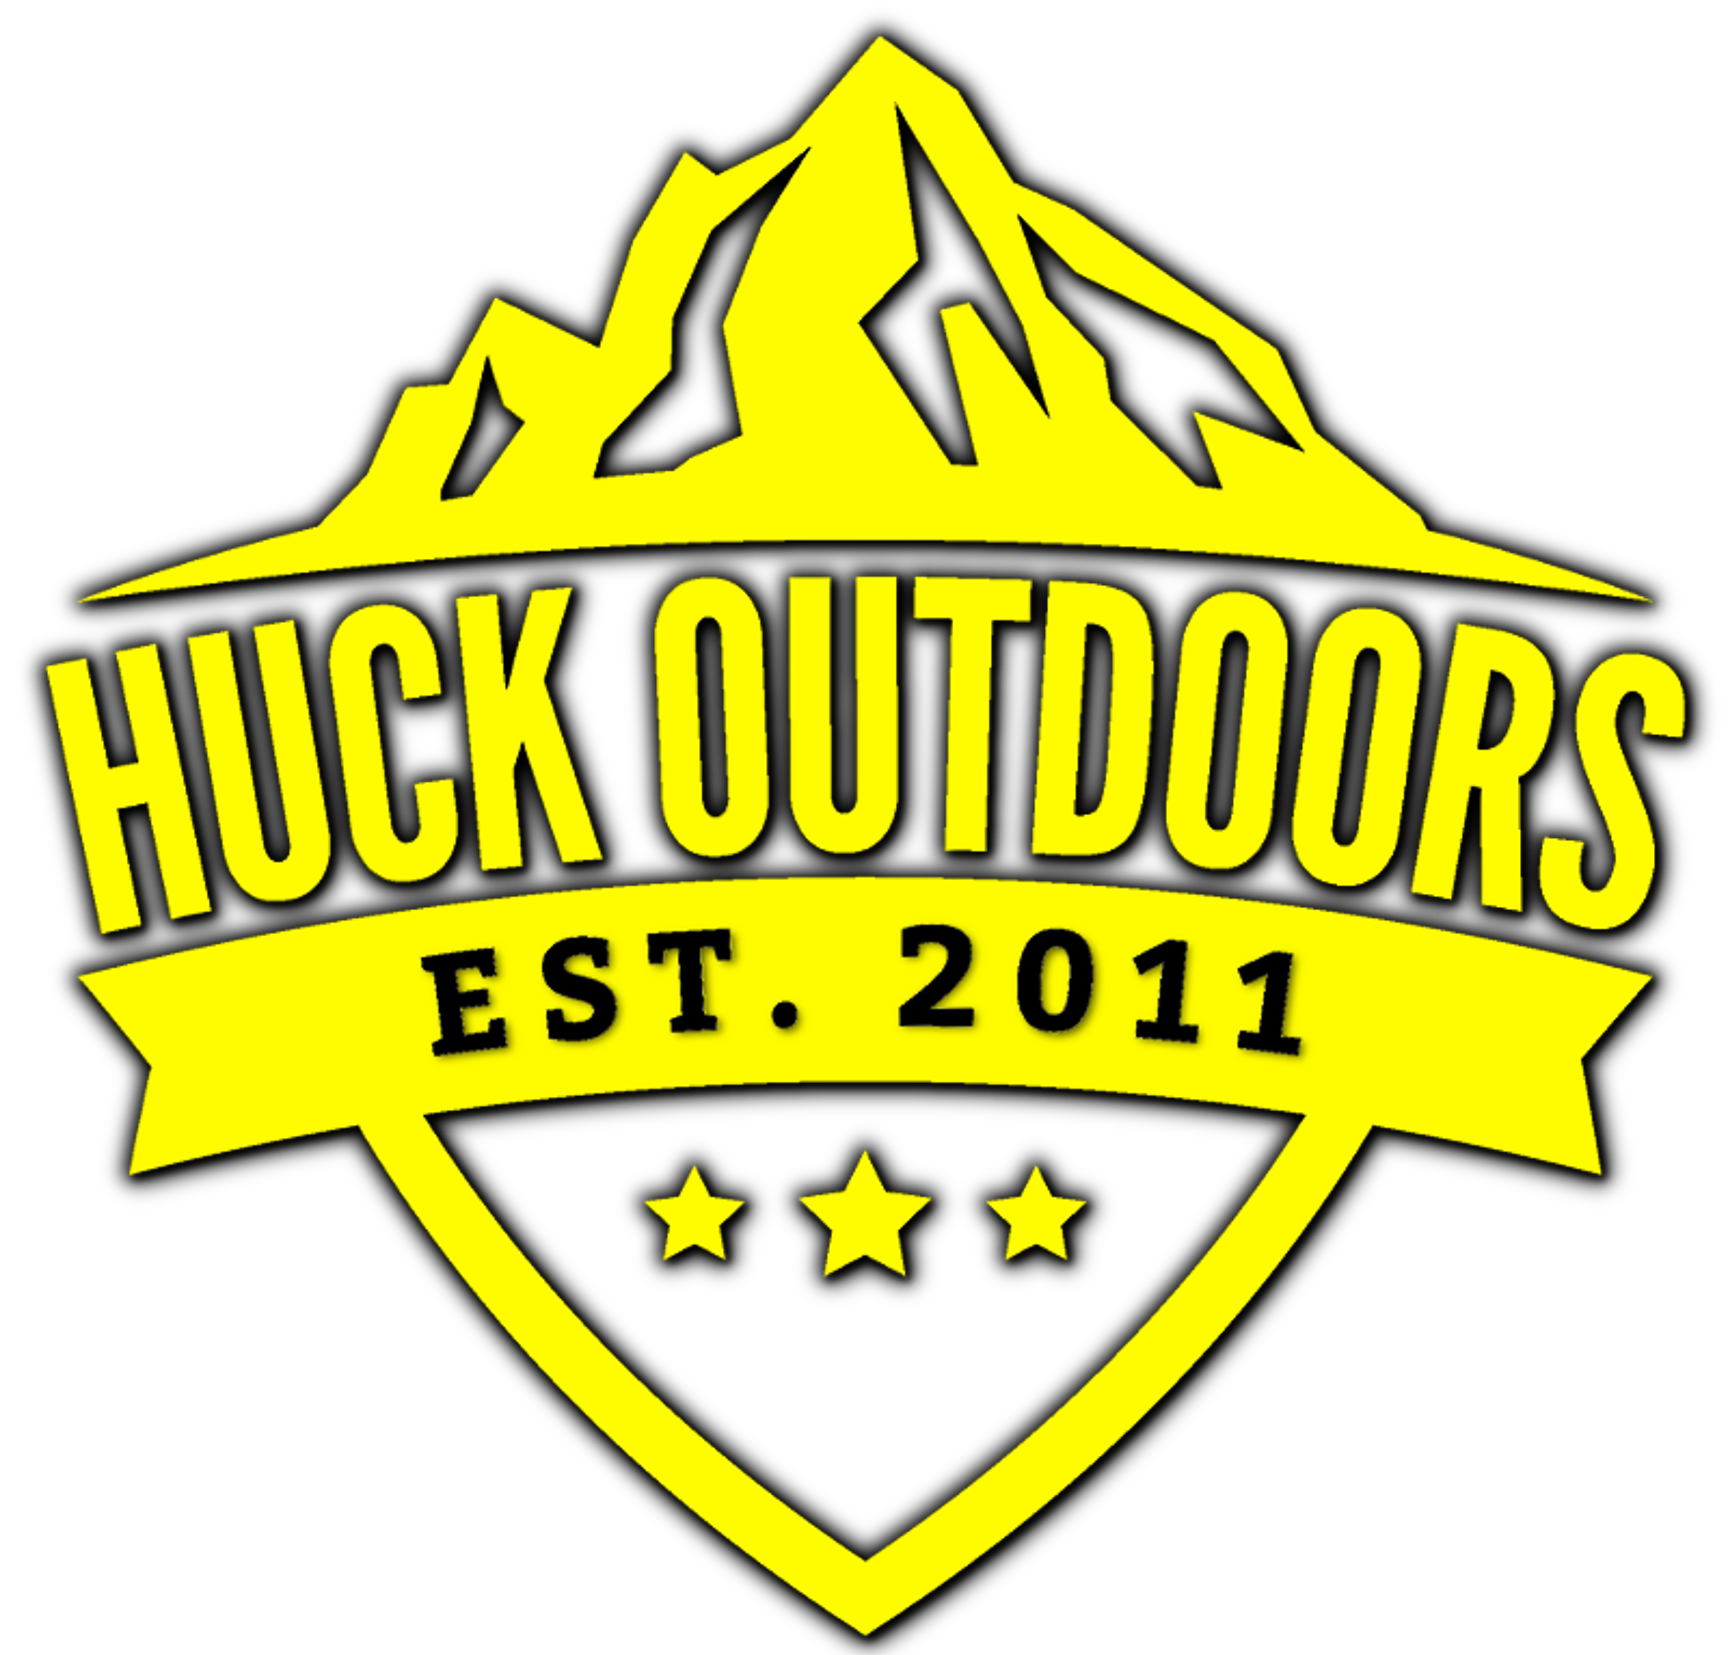 Huck Outdoors